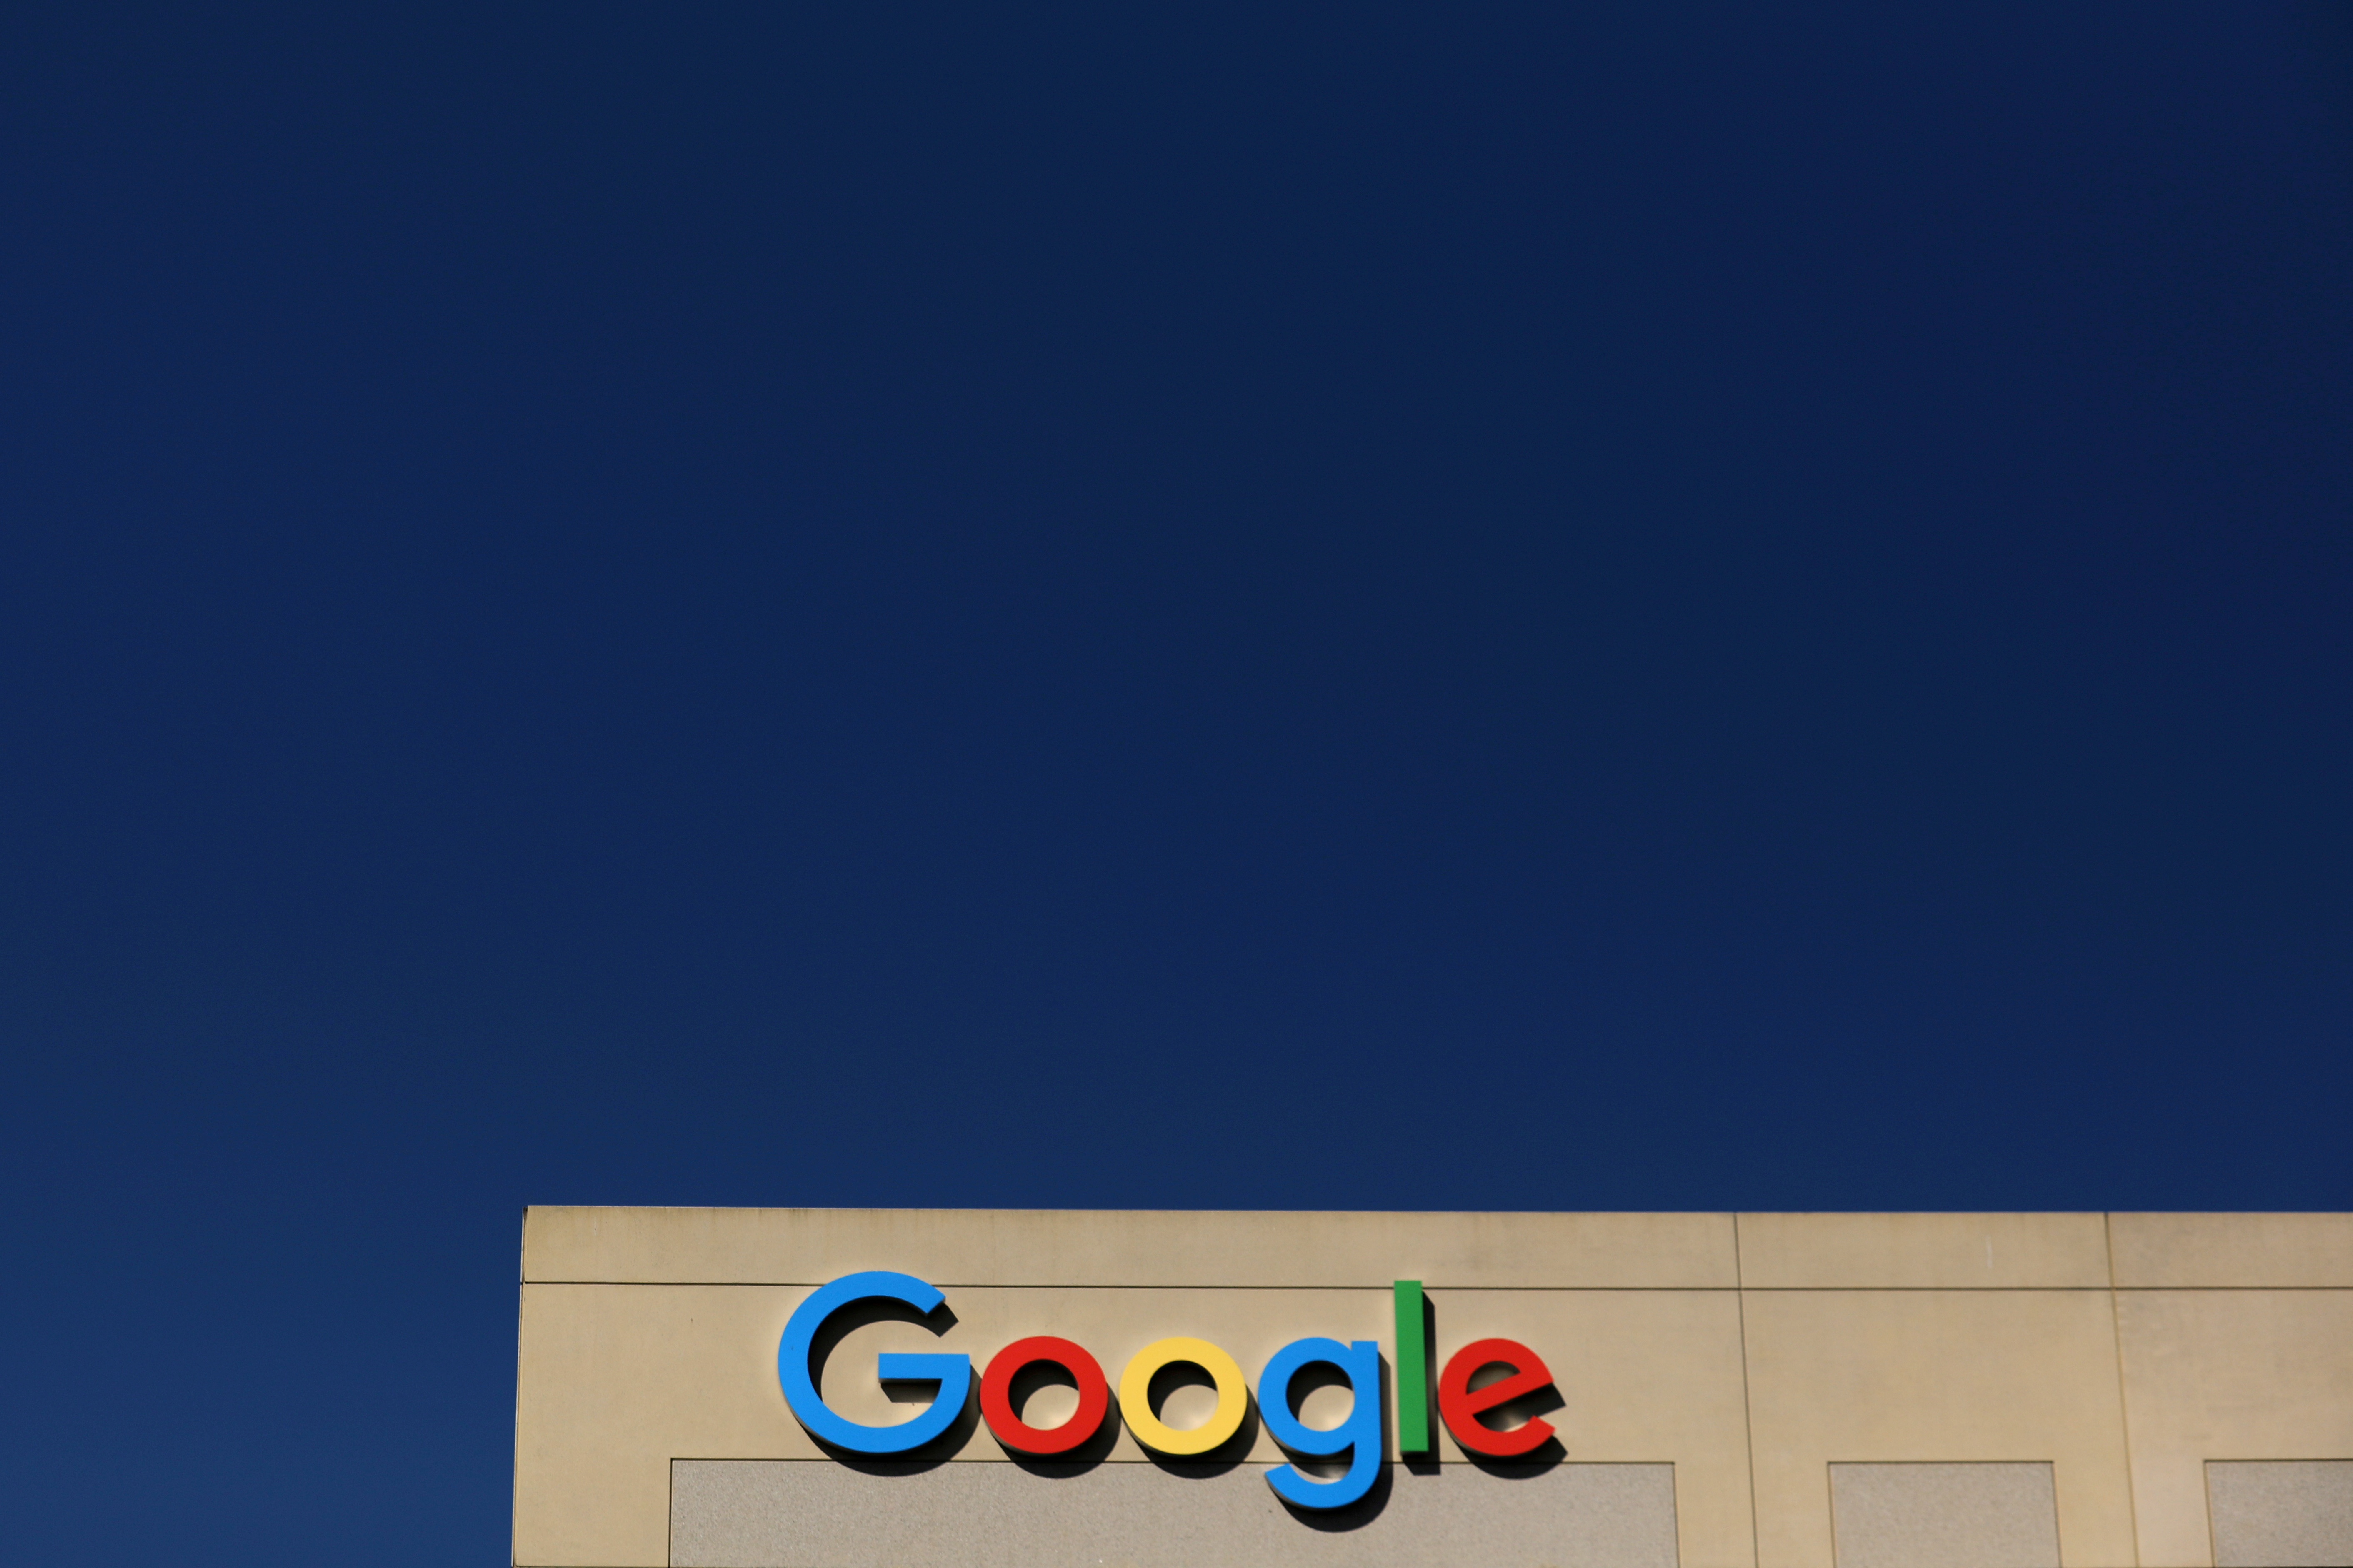 Google logo on office building in Irvine, California